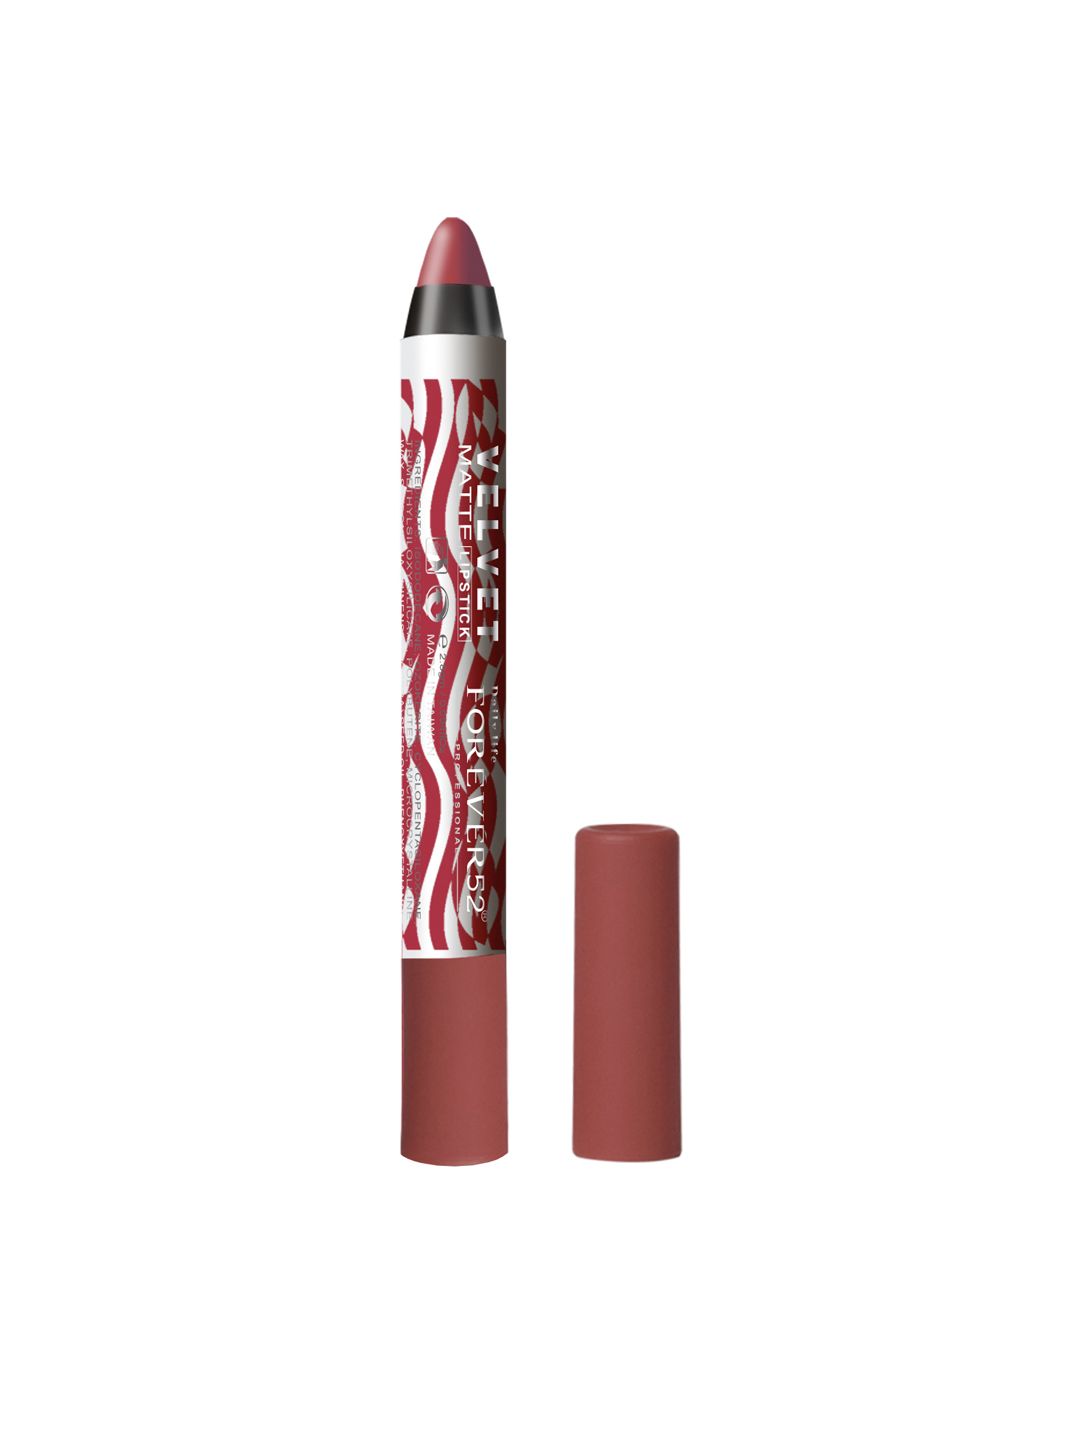 Daily Life Forever52 Pink Velvet Matte Lipstick 2.8g Price in India